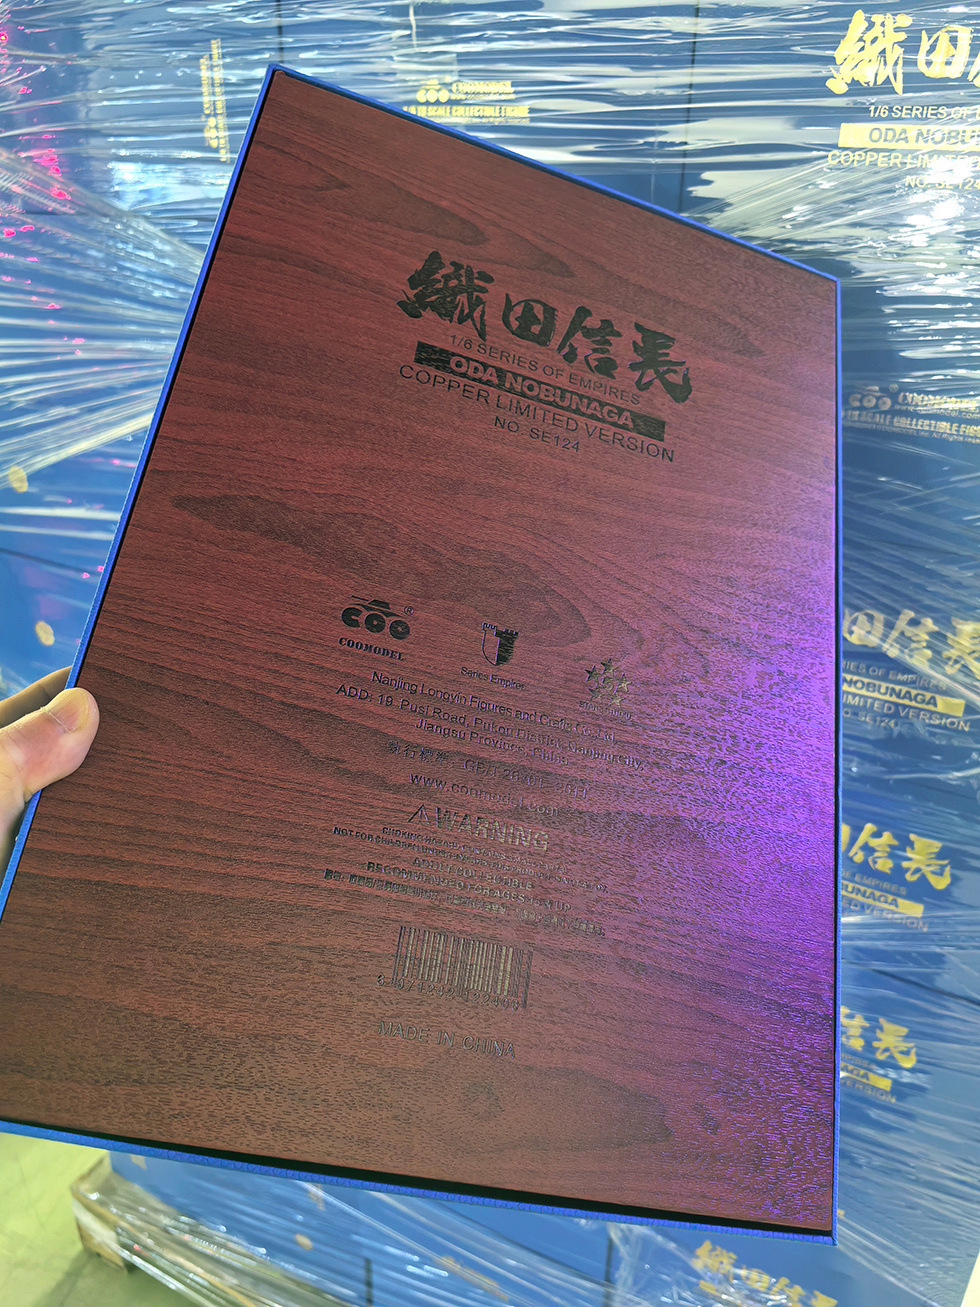 Historical - NEW PRODUCT: COOMODEL: 1/6 Empire Series - Oda Nobunaga Samurai Edition/Hunting Edition/Pure Copper Standard Edition/Pure Copper Limited Collection Edition #SE124 B6b66012